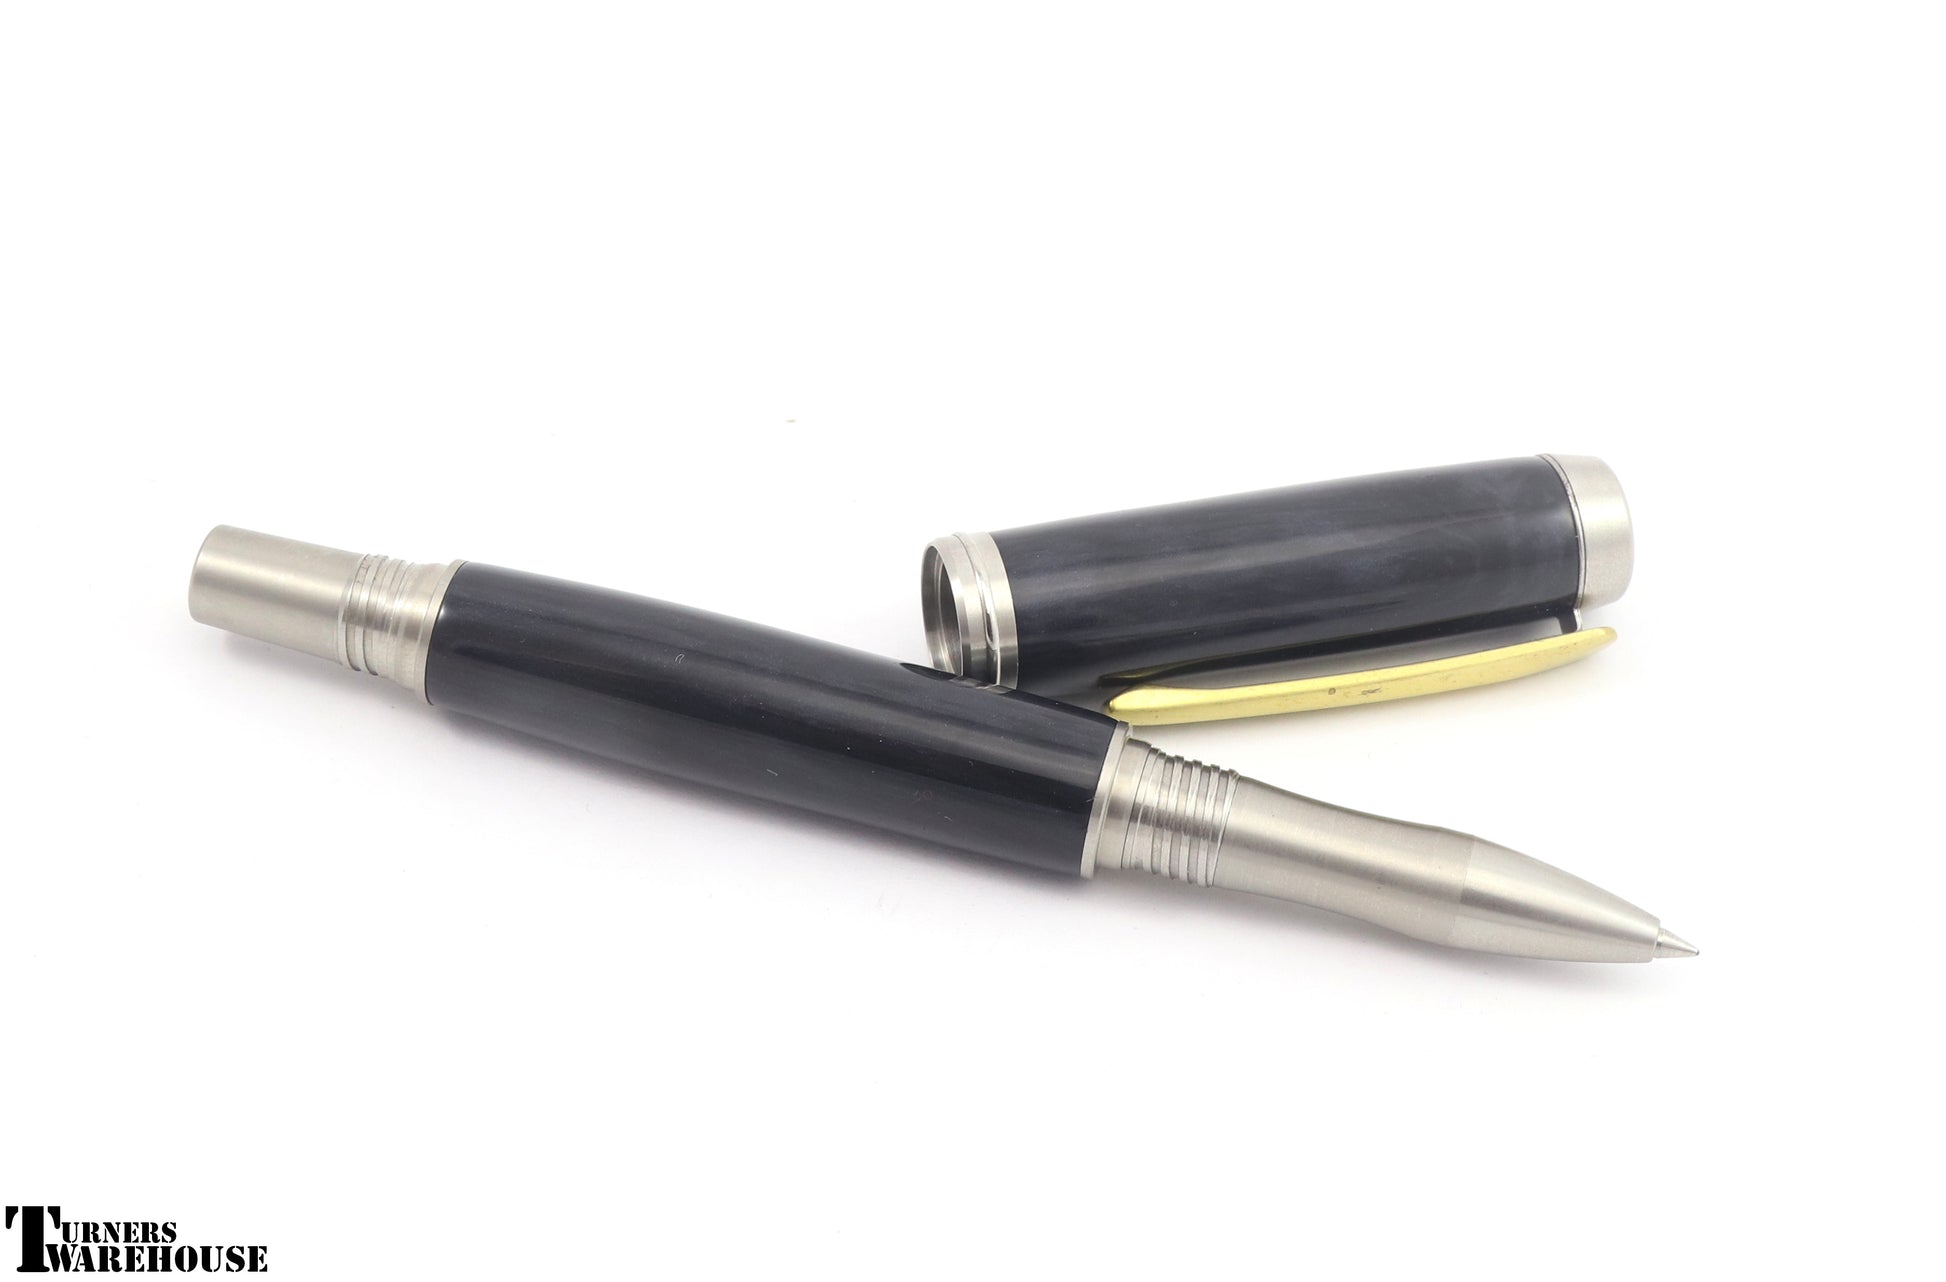  Element Series JR Series Pen Kit Stainless Steel